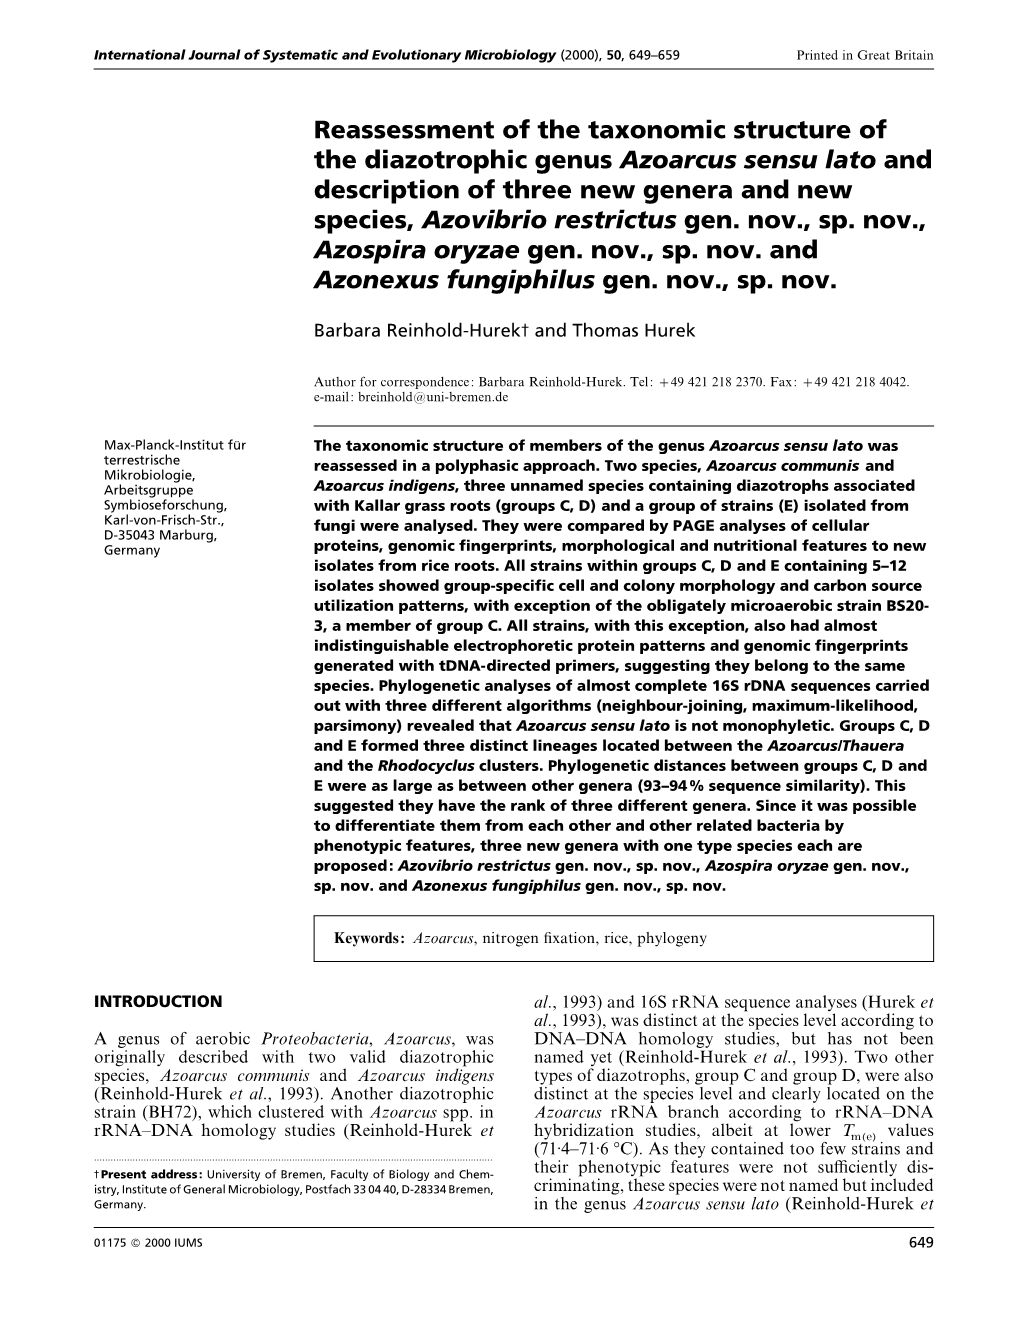 Reassessment of the Taxonomic Structure of the Diazotrophic Genus Azoarcus Sensu Lato and Description of Three New Genera and New Species, Azovibrio Restrictus Gen